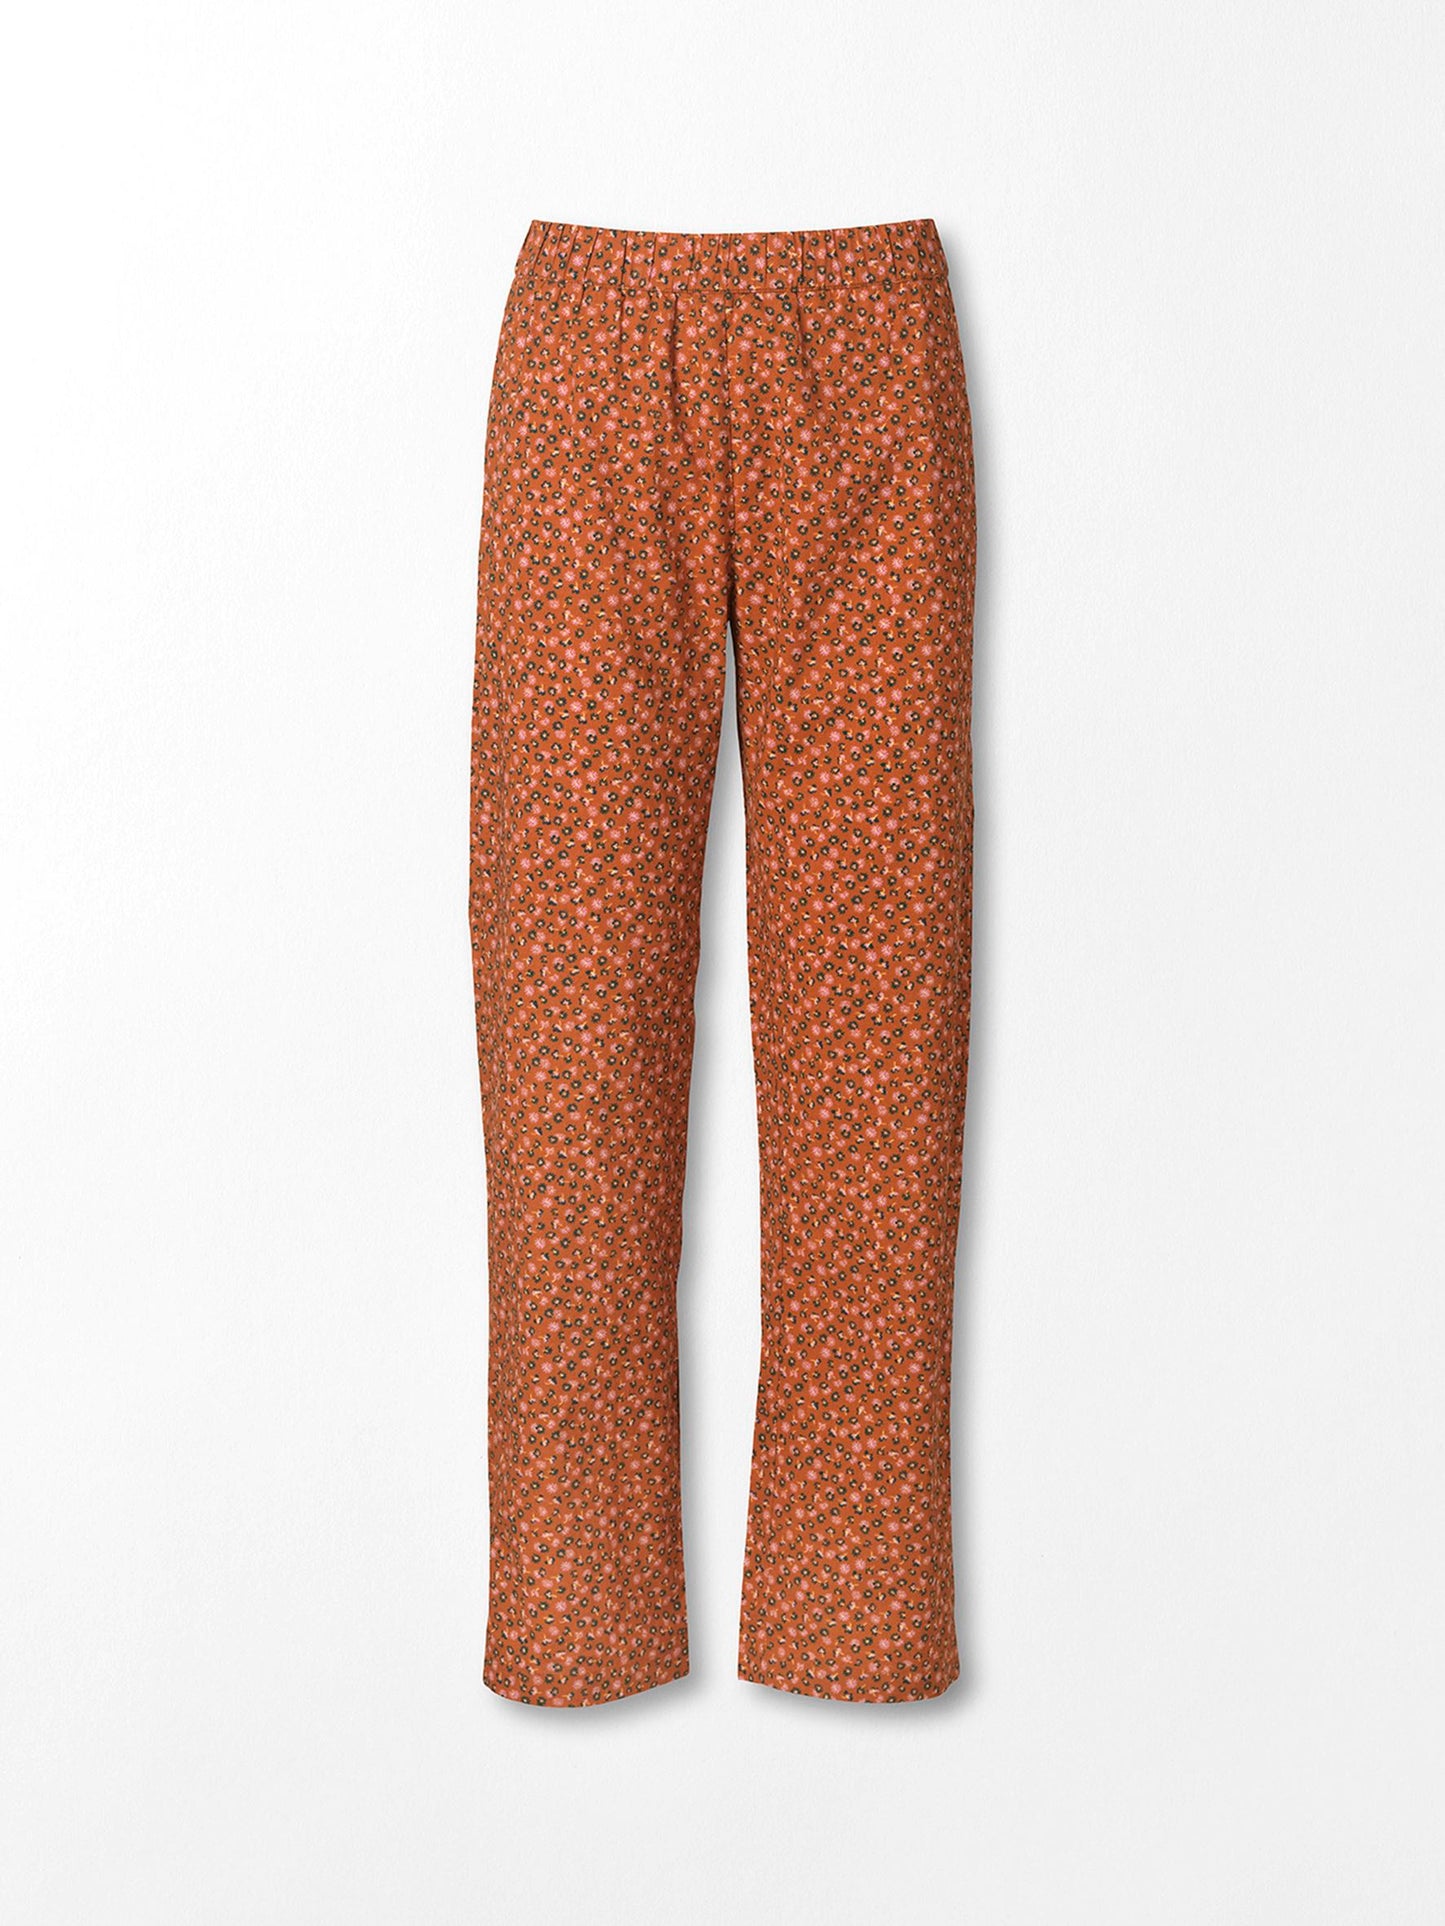 Becksöndergaard, Aiyana Pyjamas Set - Pecan Brown, clothing